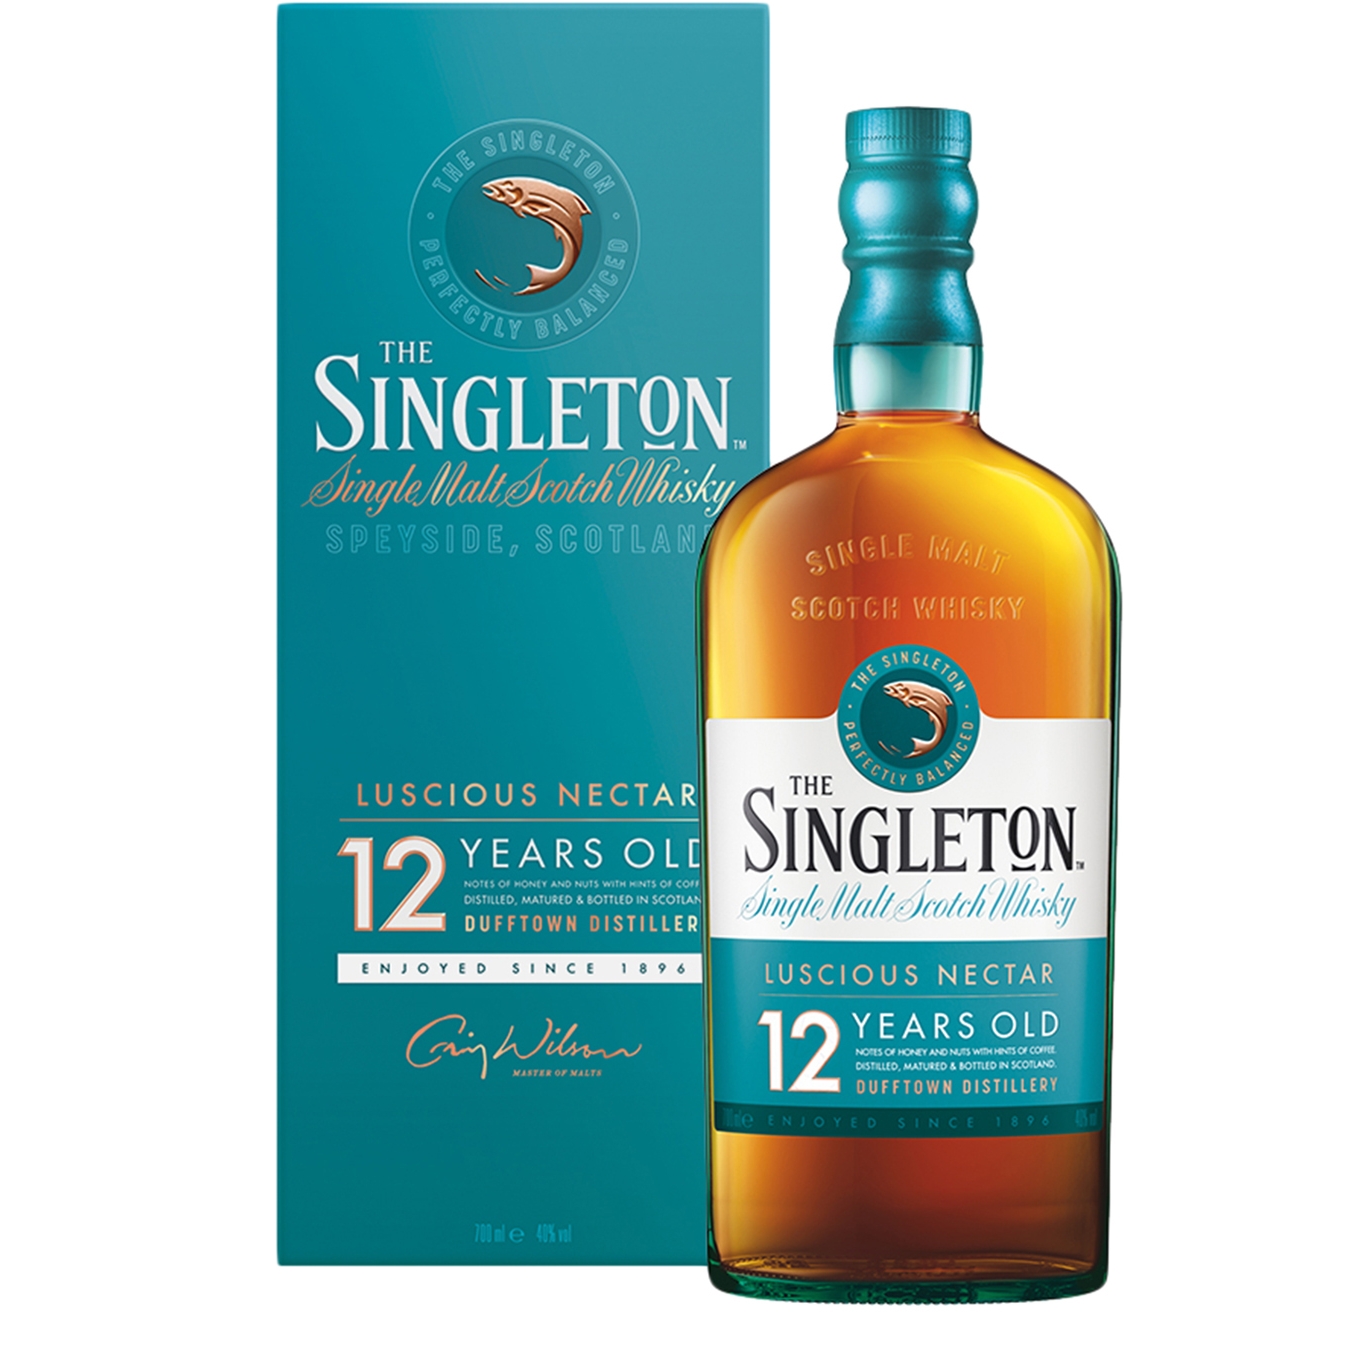 The Singleton The Singleton Of Dufftown 12 Year Old Single Malt Scotch Whisky